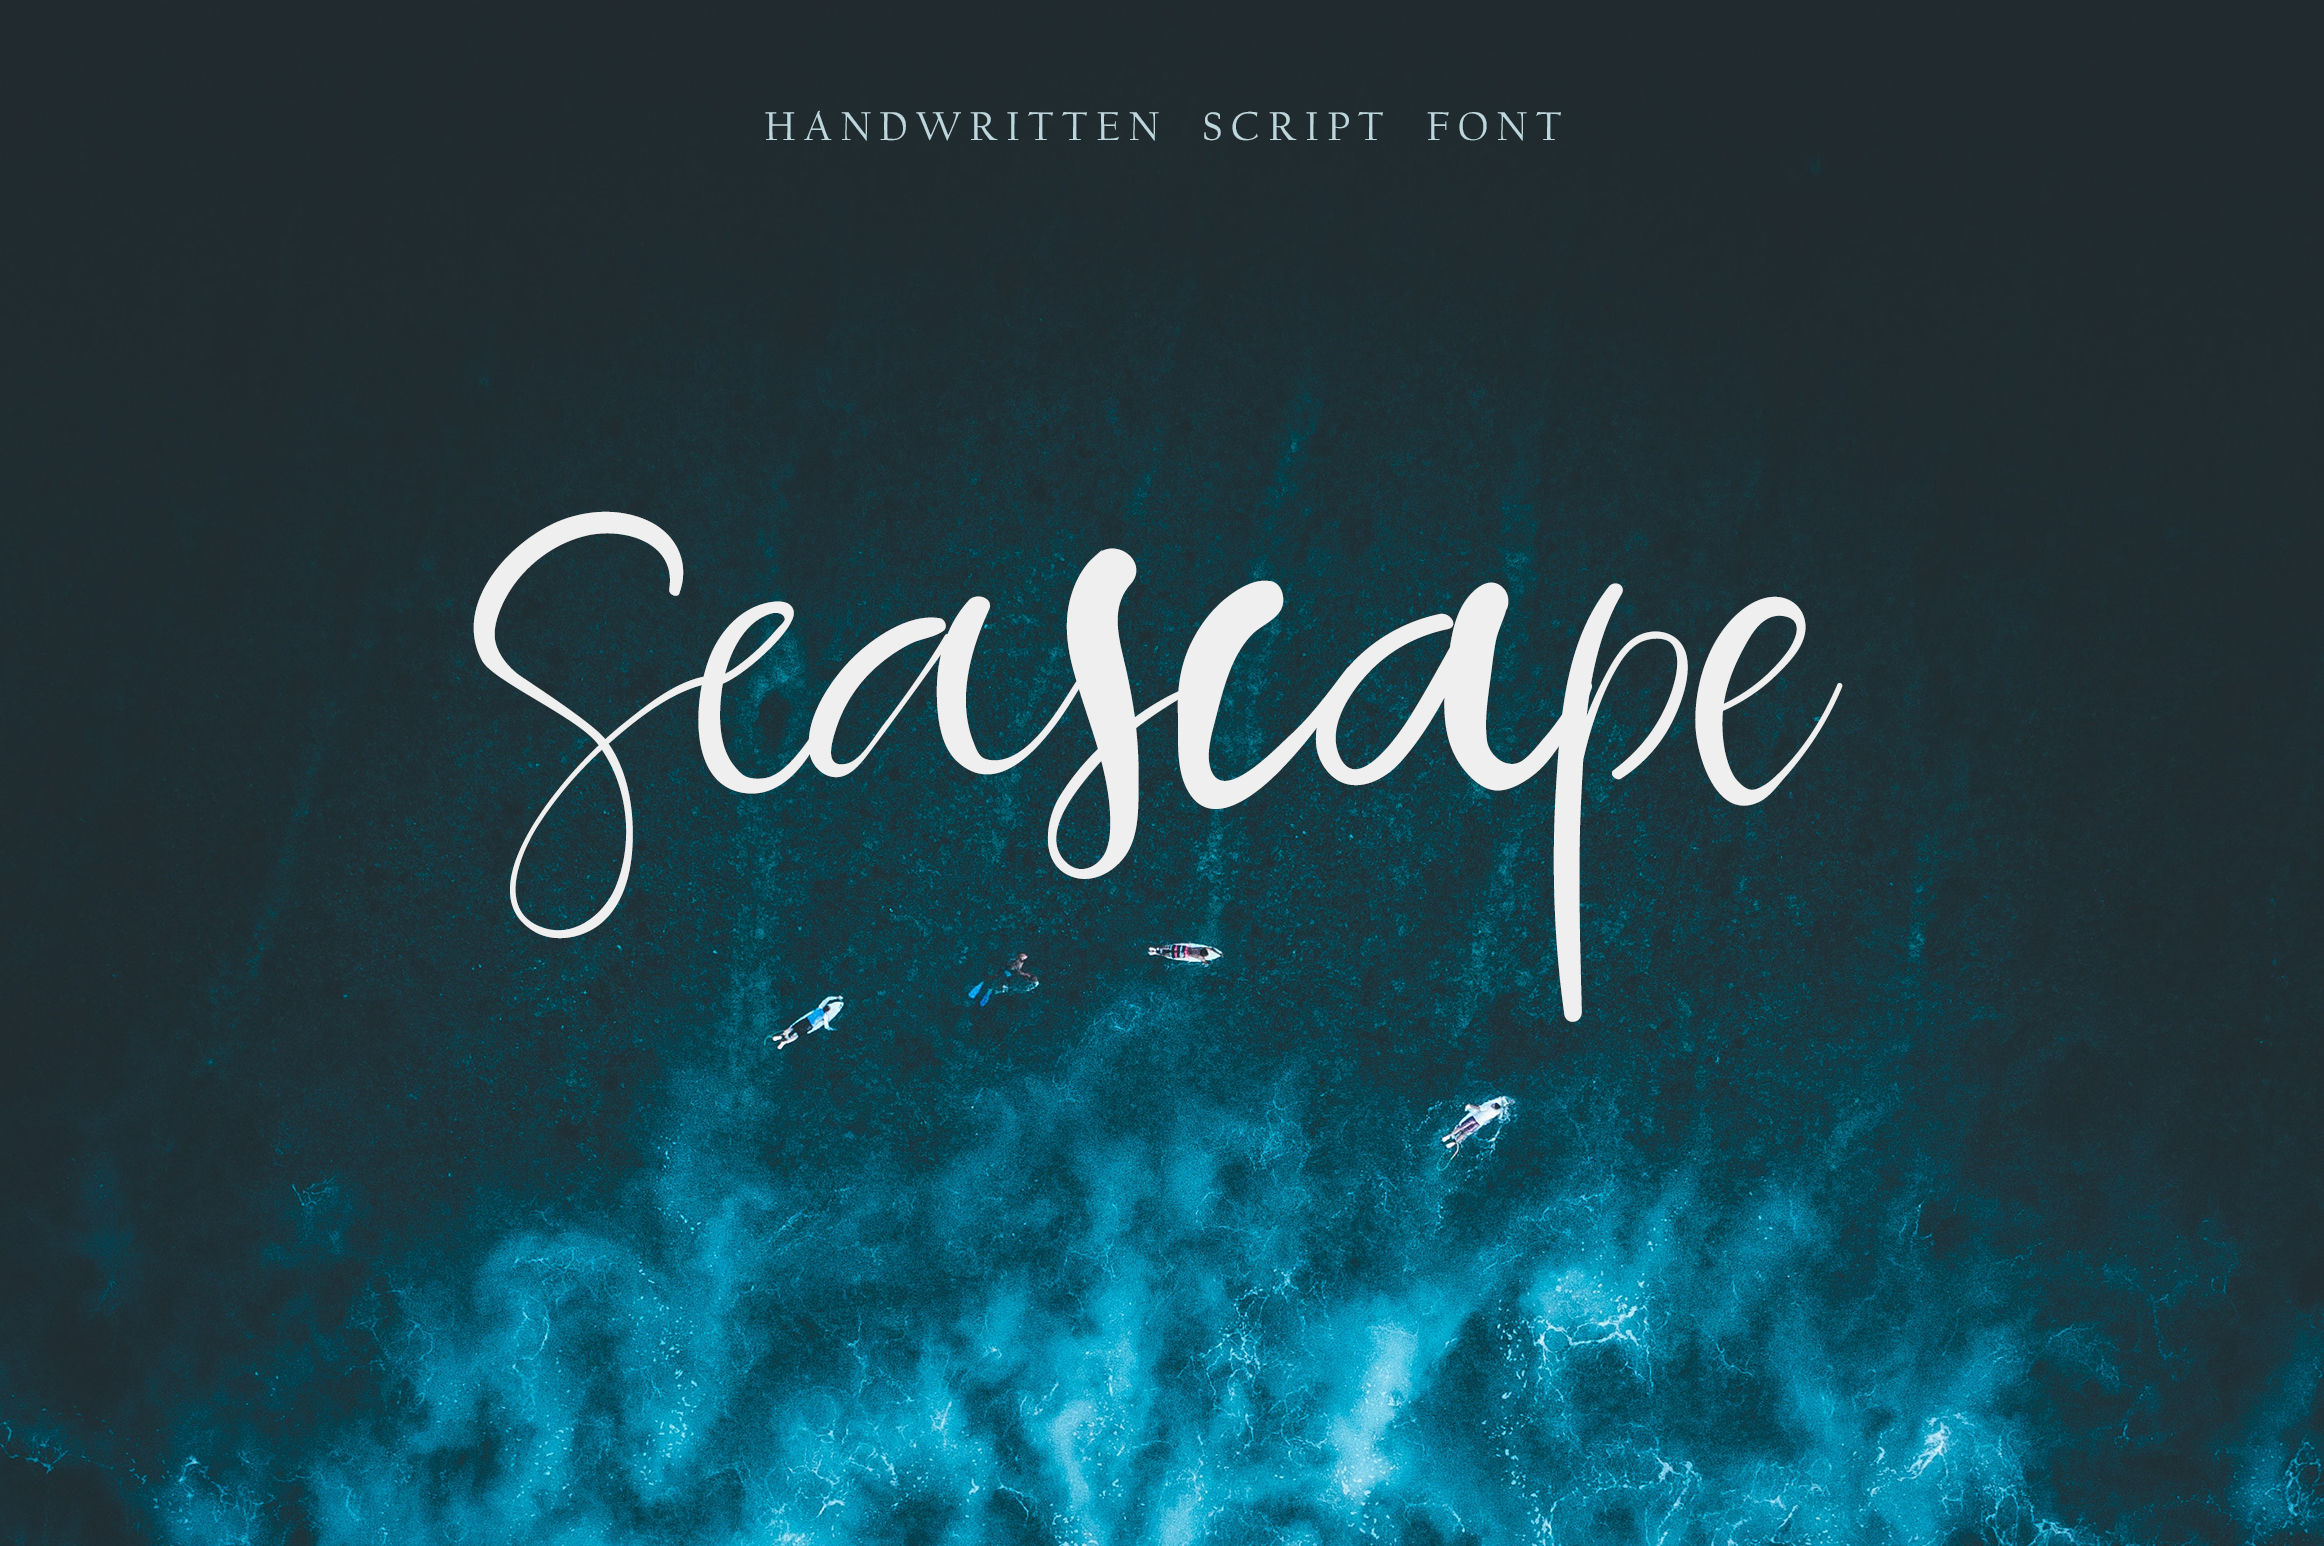 Seascape script. | Pixelify | Best Free Fonts, Mockups, Templates ...